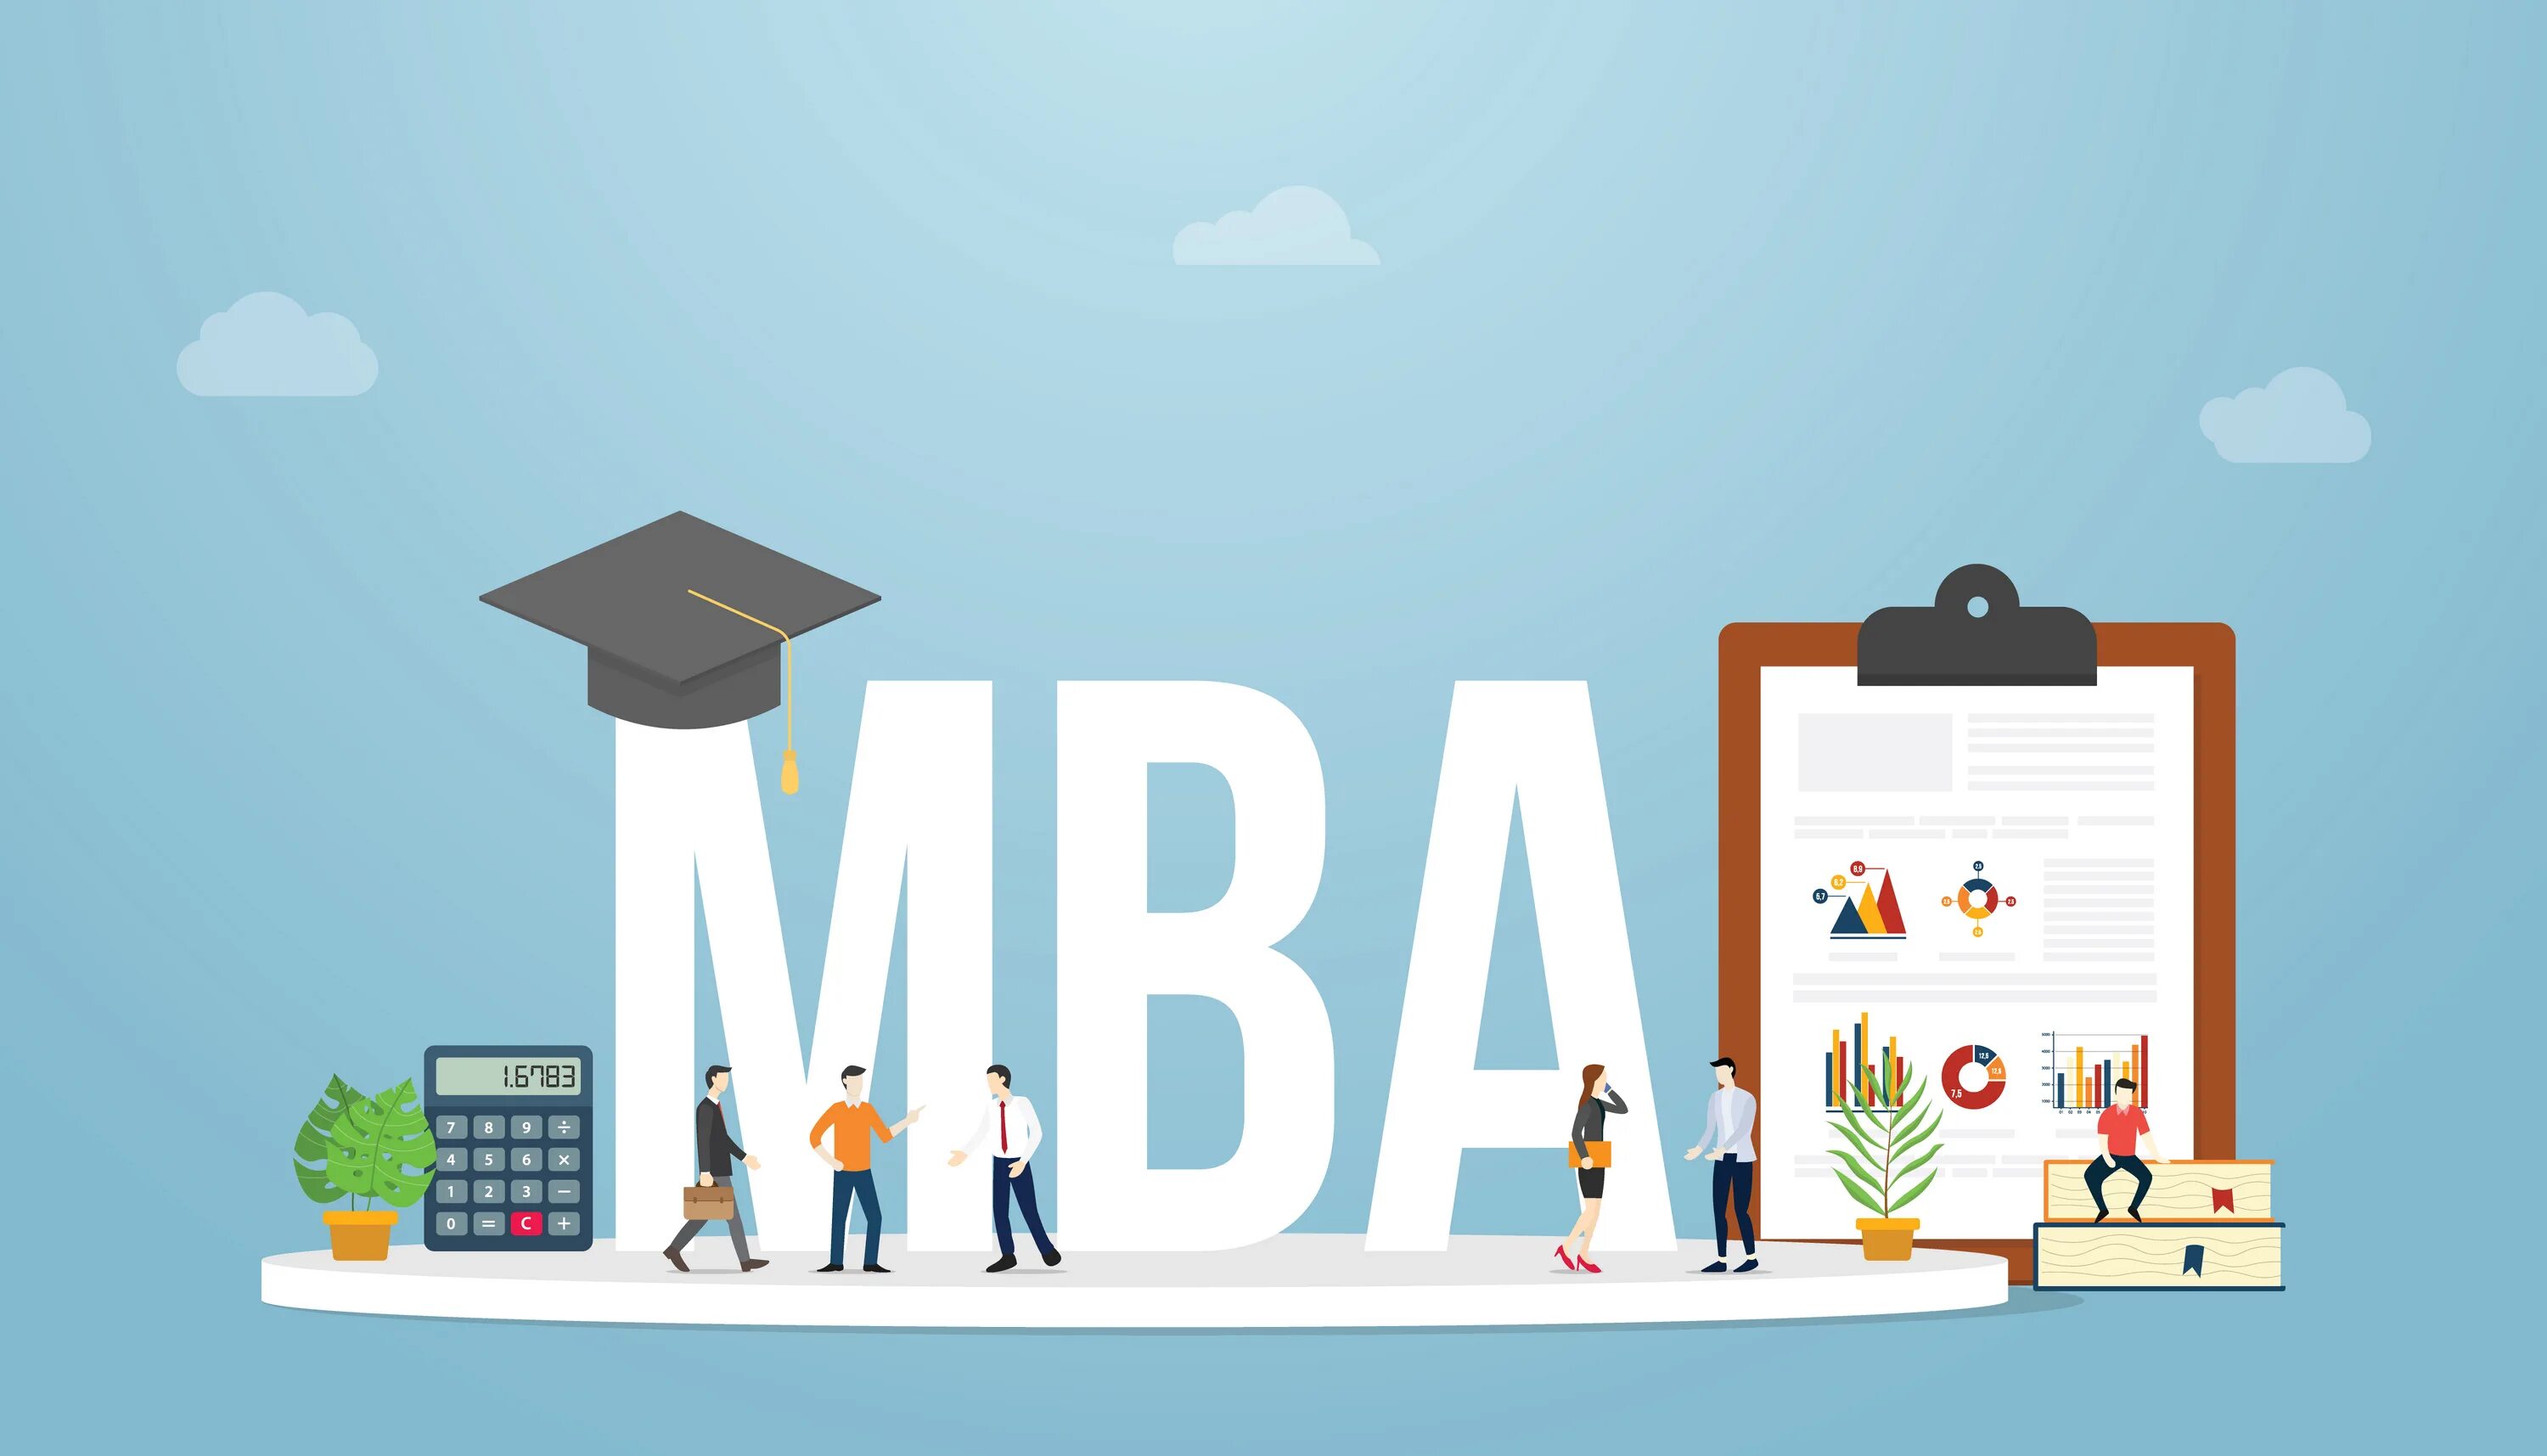 МВА. MBA логотип. МБА В картинках. МВА обучение картинки.